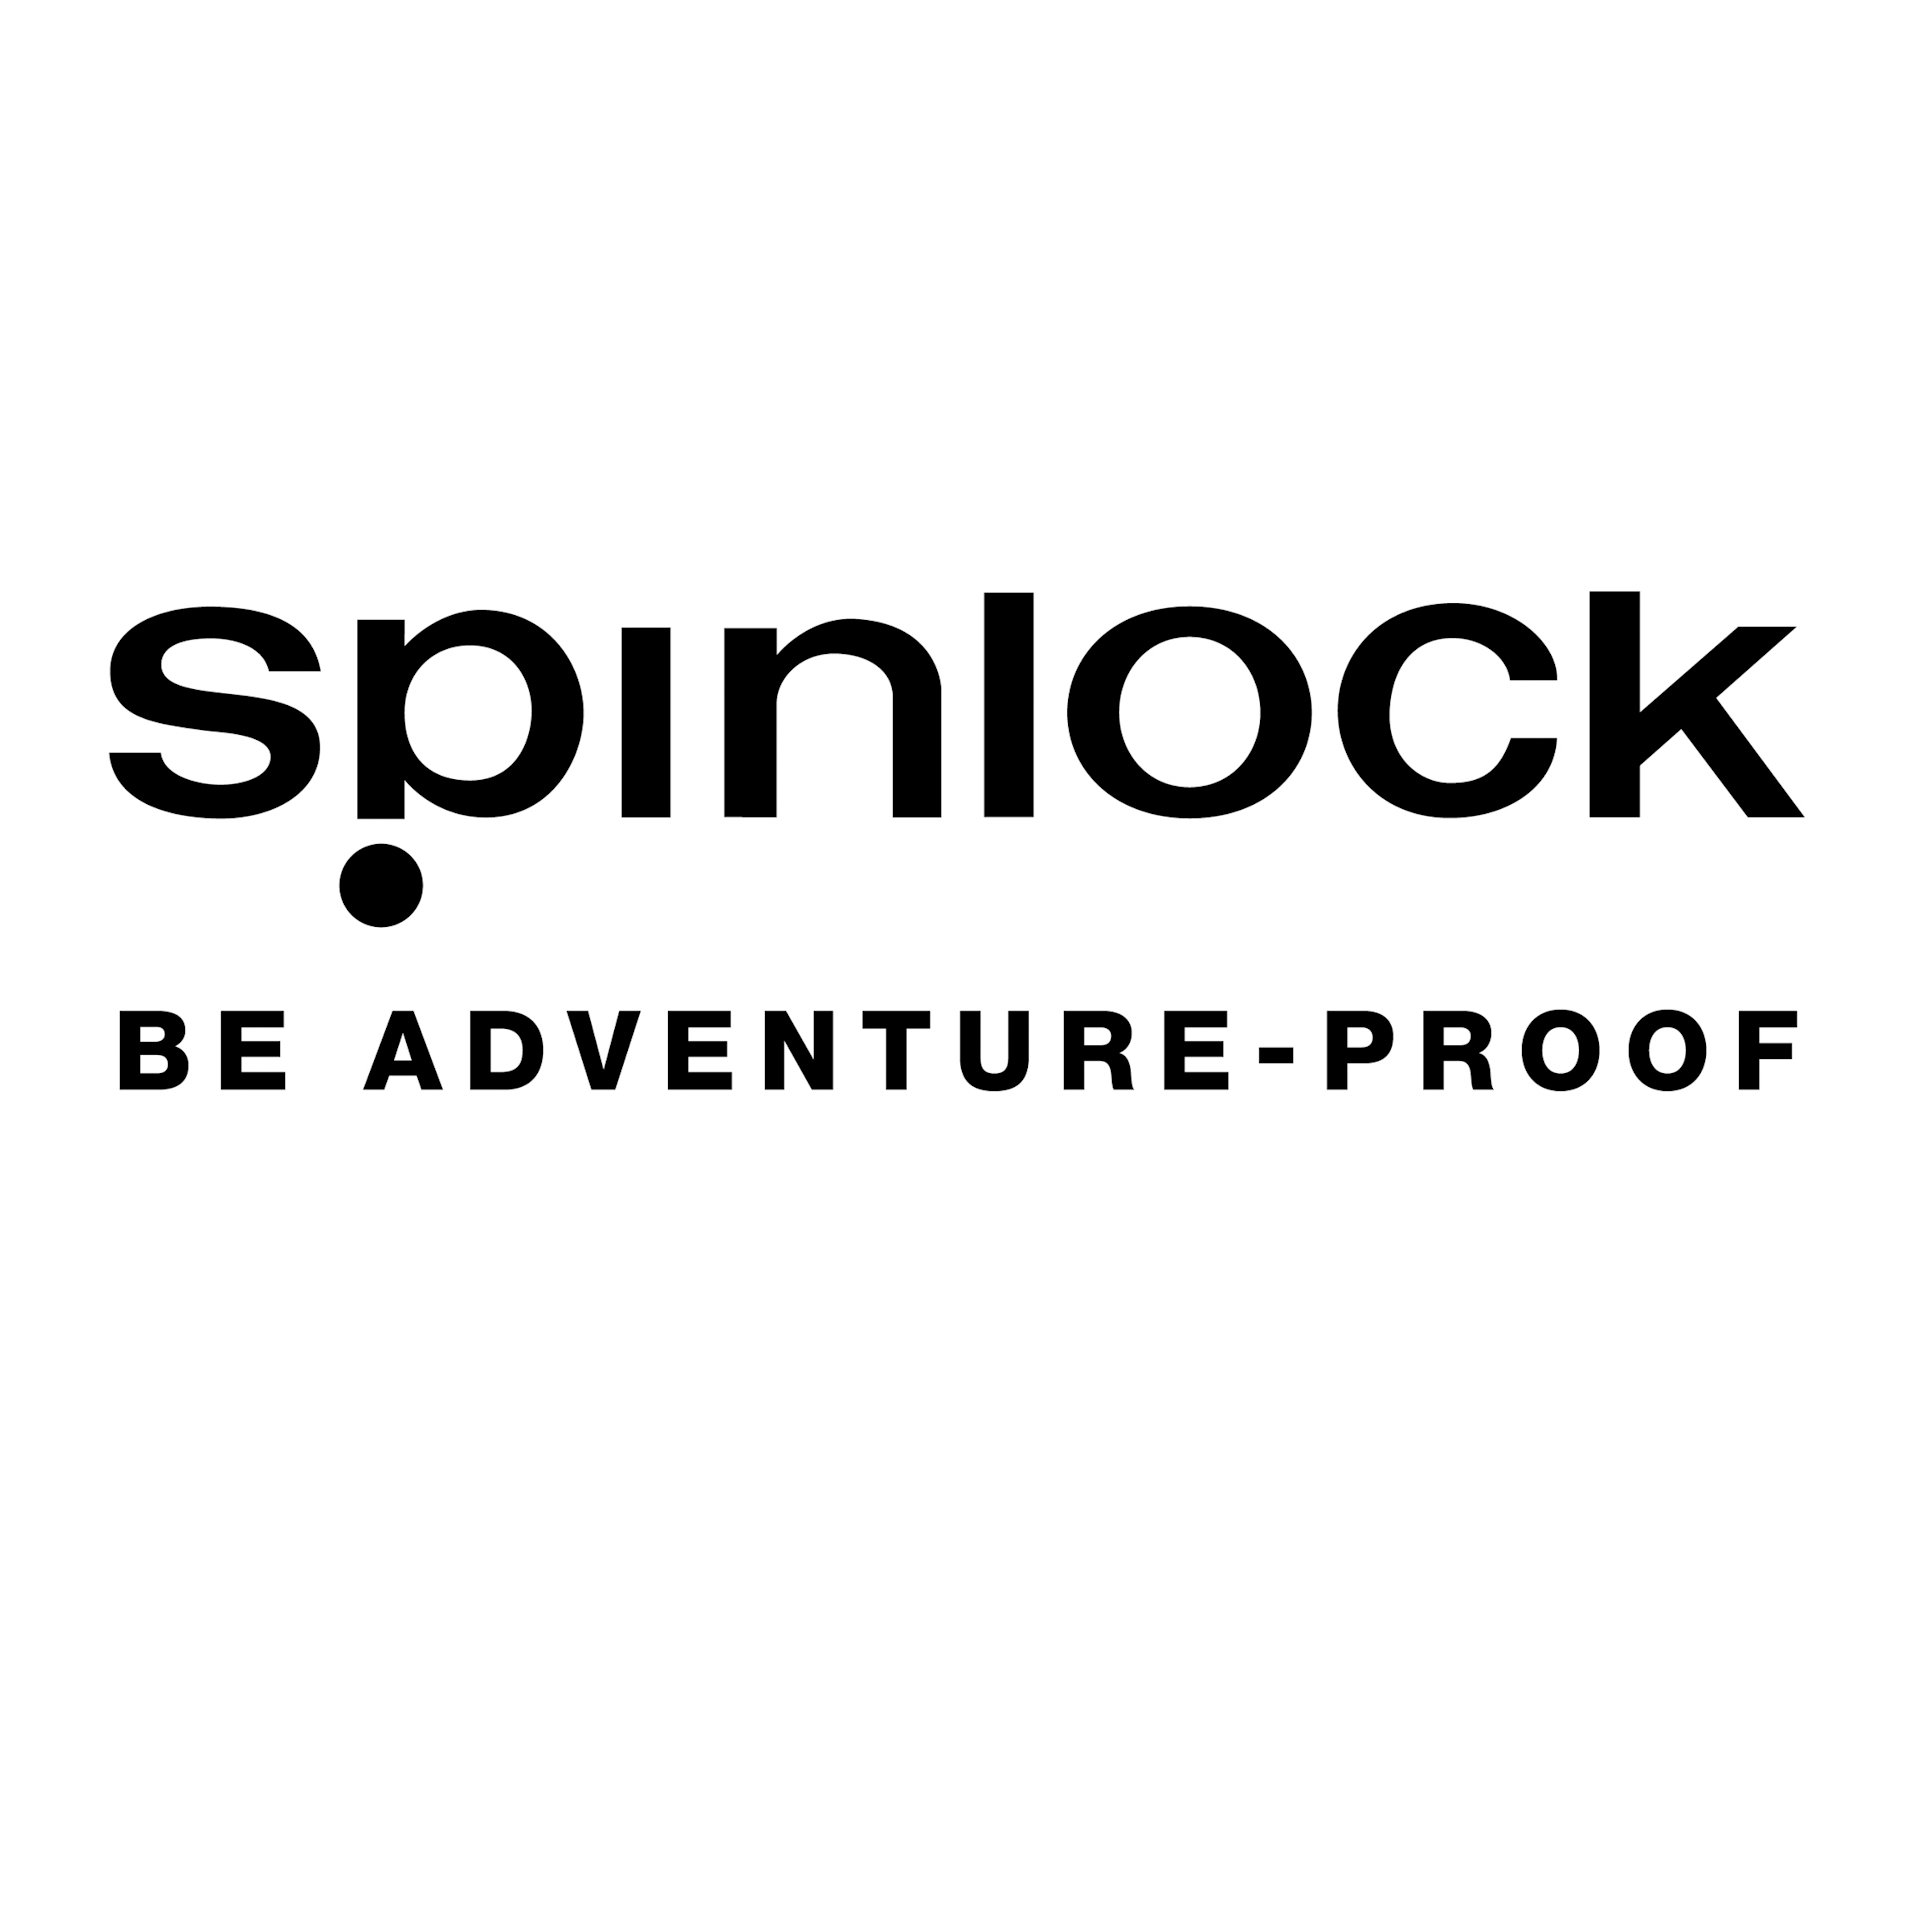 spinlock_sq_edited.jpg